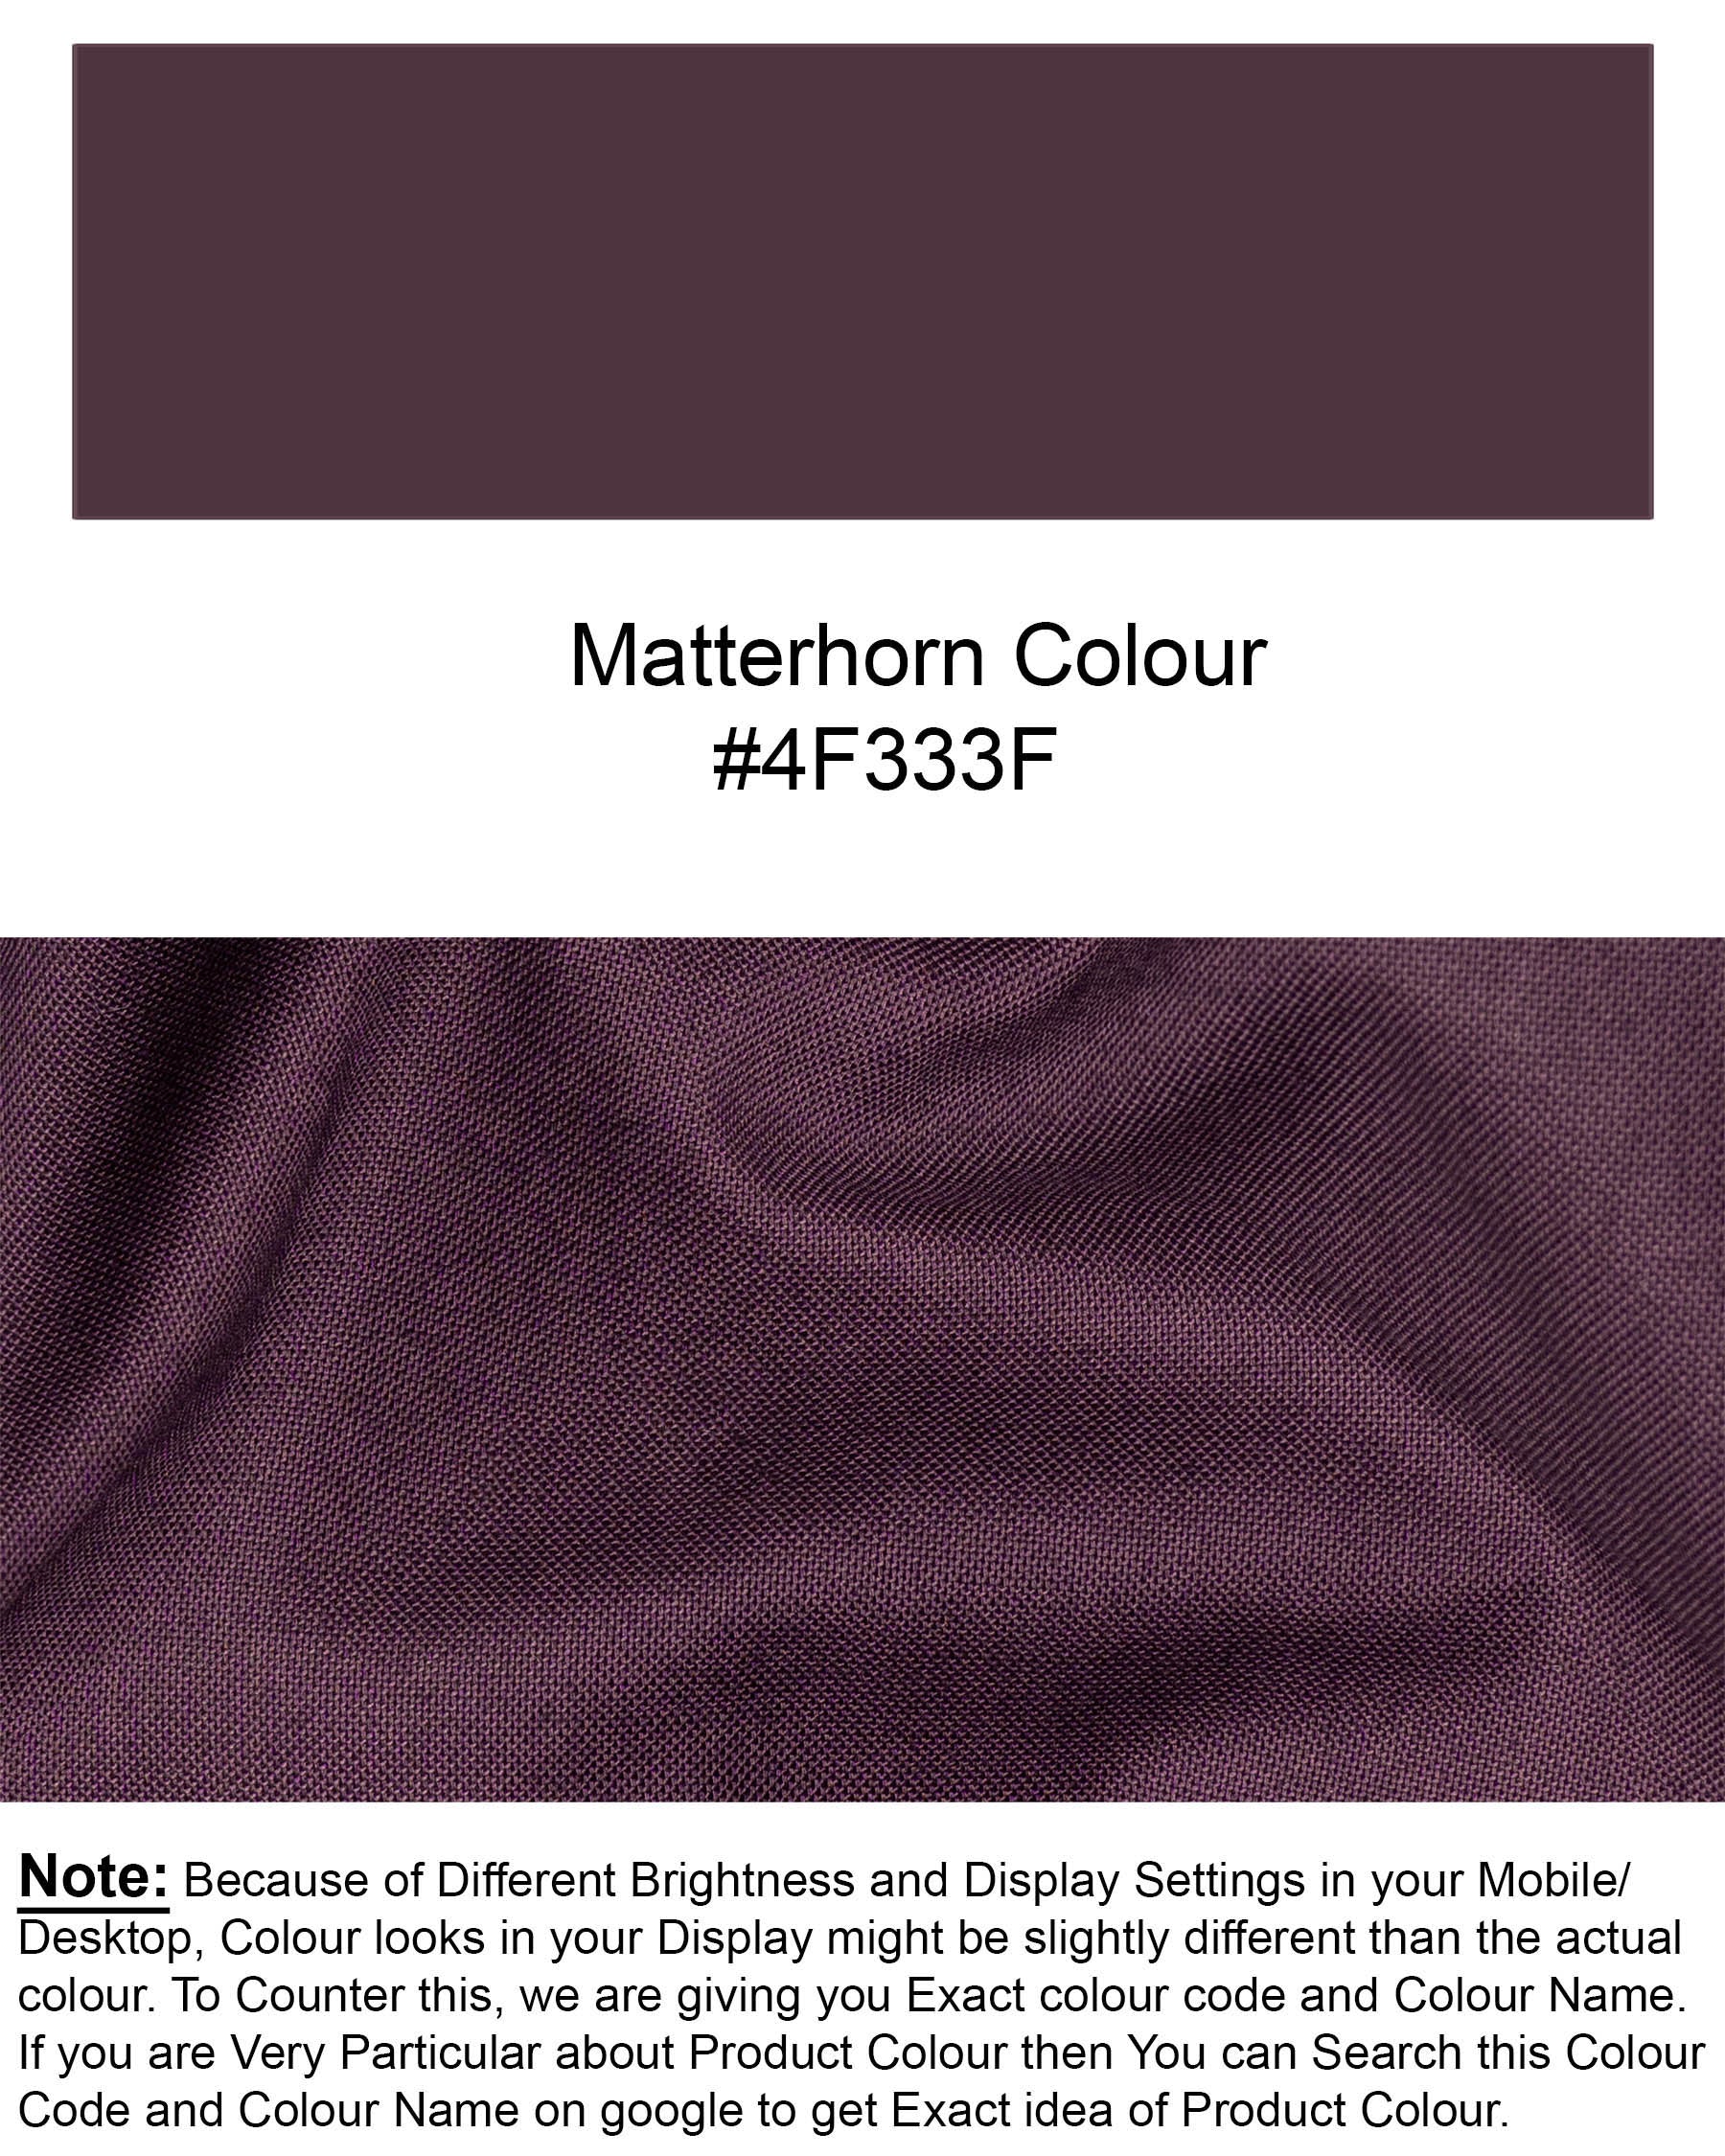 Matterhorn Violet Royal Oxford Shirt 6305-BD-BLK-38, 6305-BD-BLK-H-38, 6305-BD-BLK-39, 6305-BD-BLK-H-39, 6305-BD-BLK-40, 6305-BD-BLK-H-40, 6305-BD-BLK-42, 6305-BD-BLK-H-42, 6305-BD-BLK-44, 6305-BD-BLK-H-44, 6305-BD-BLK-46, 6305-BD-BLK-H-46, 6305-BD-BLK-48, 6305-BD-BLK-H-48, 6305-BD-BLK-50, 6305-BD-BLK-H-50, 6305-BD-BLK-52, 6305-BD-BLK-H-52